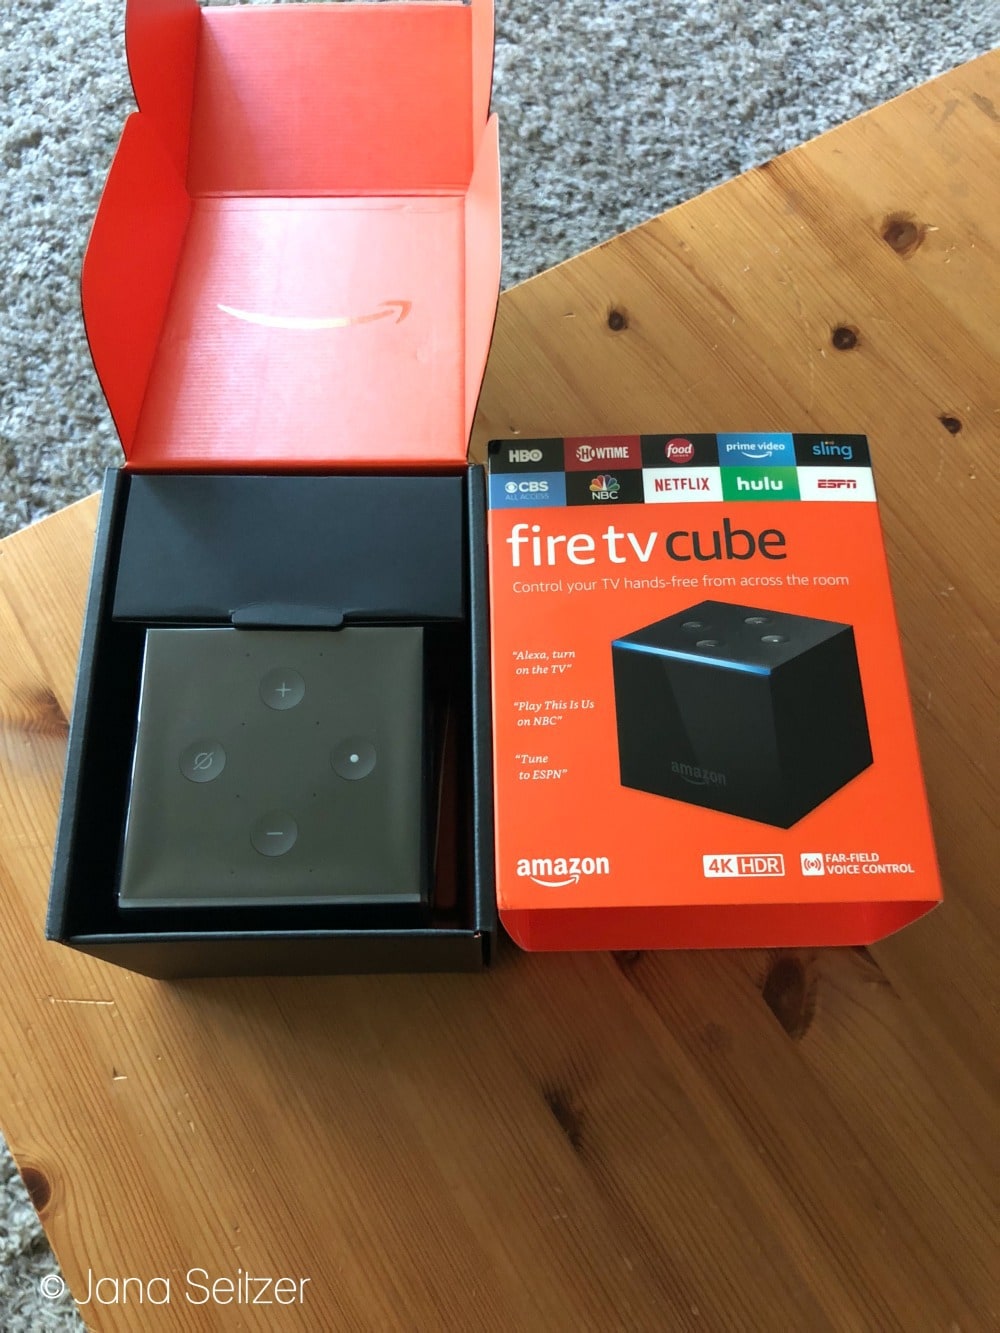 Amazon Fire TV Cube for simple entertainment integration - box